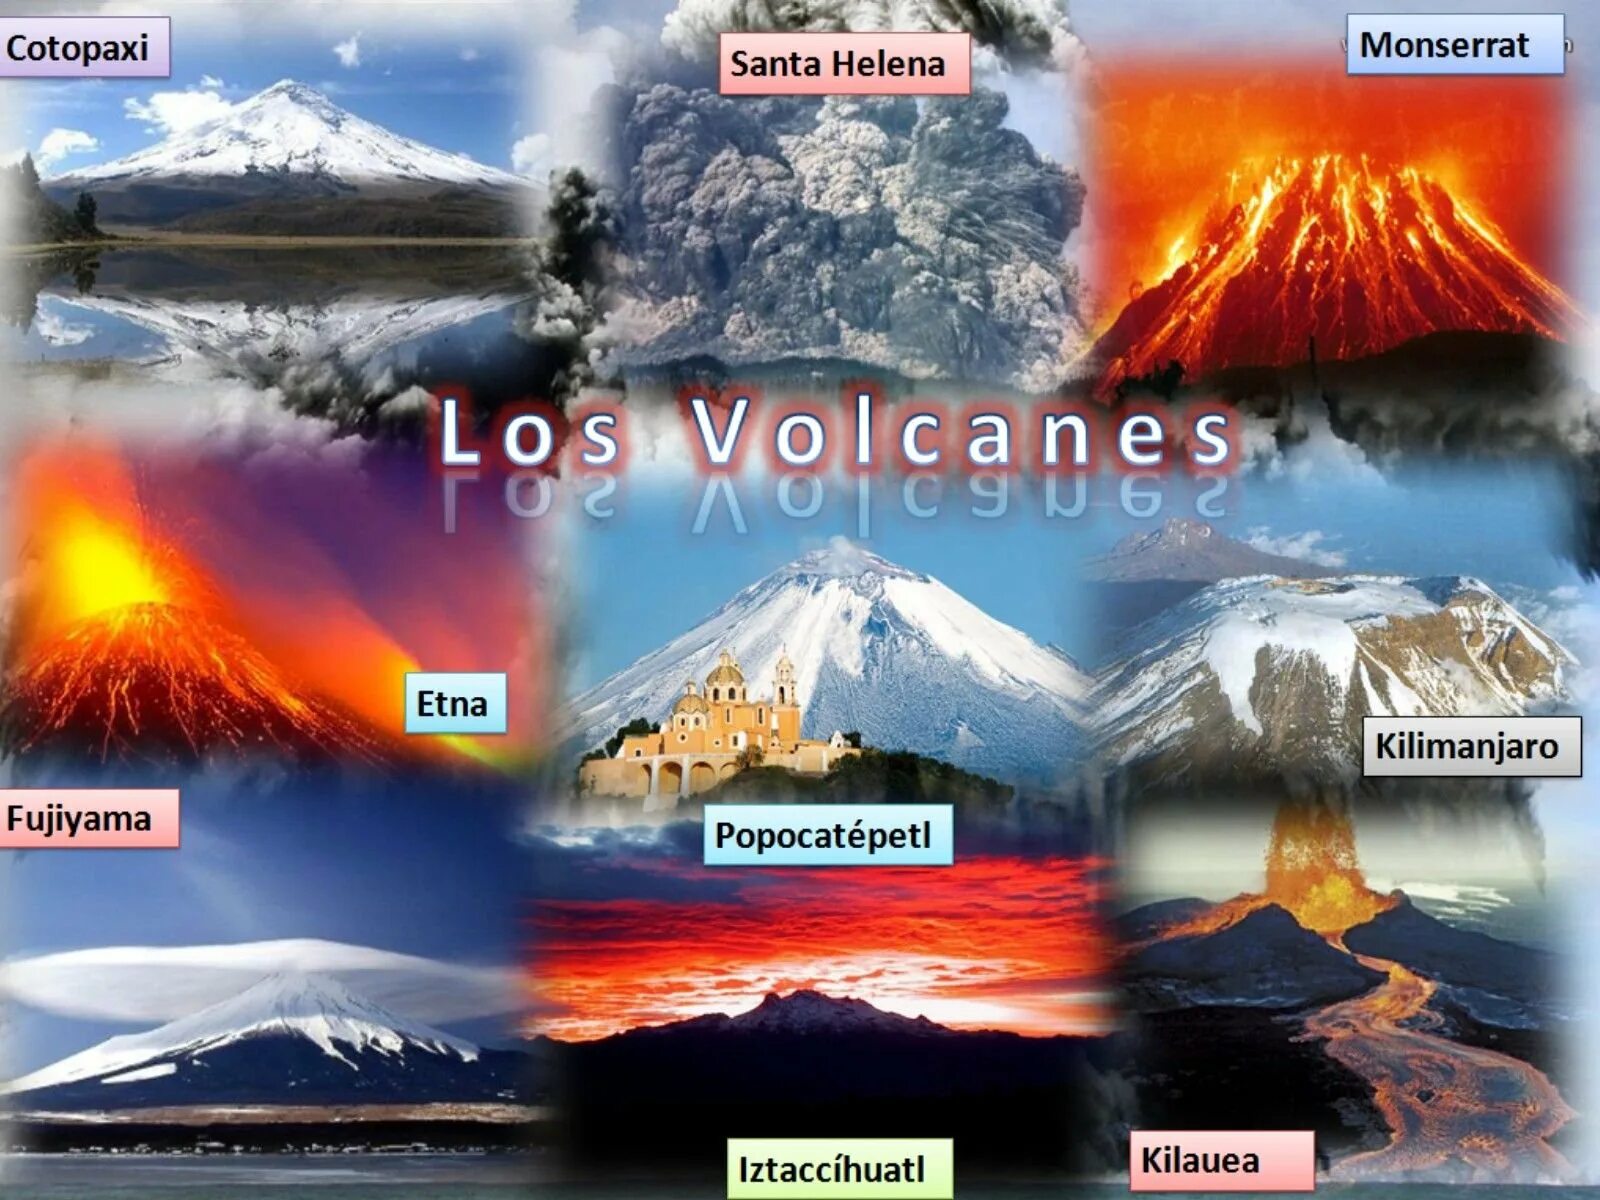 Вулкан Котопахи на карте. Вулканы коллаж. Фотоколлаж вулкана.